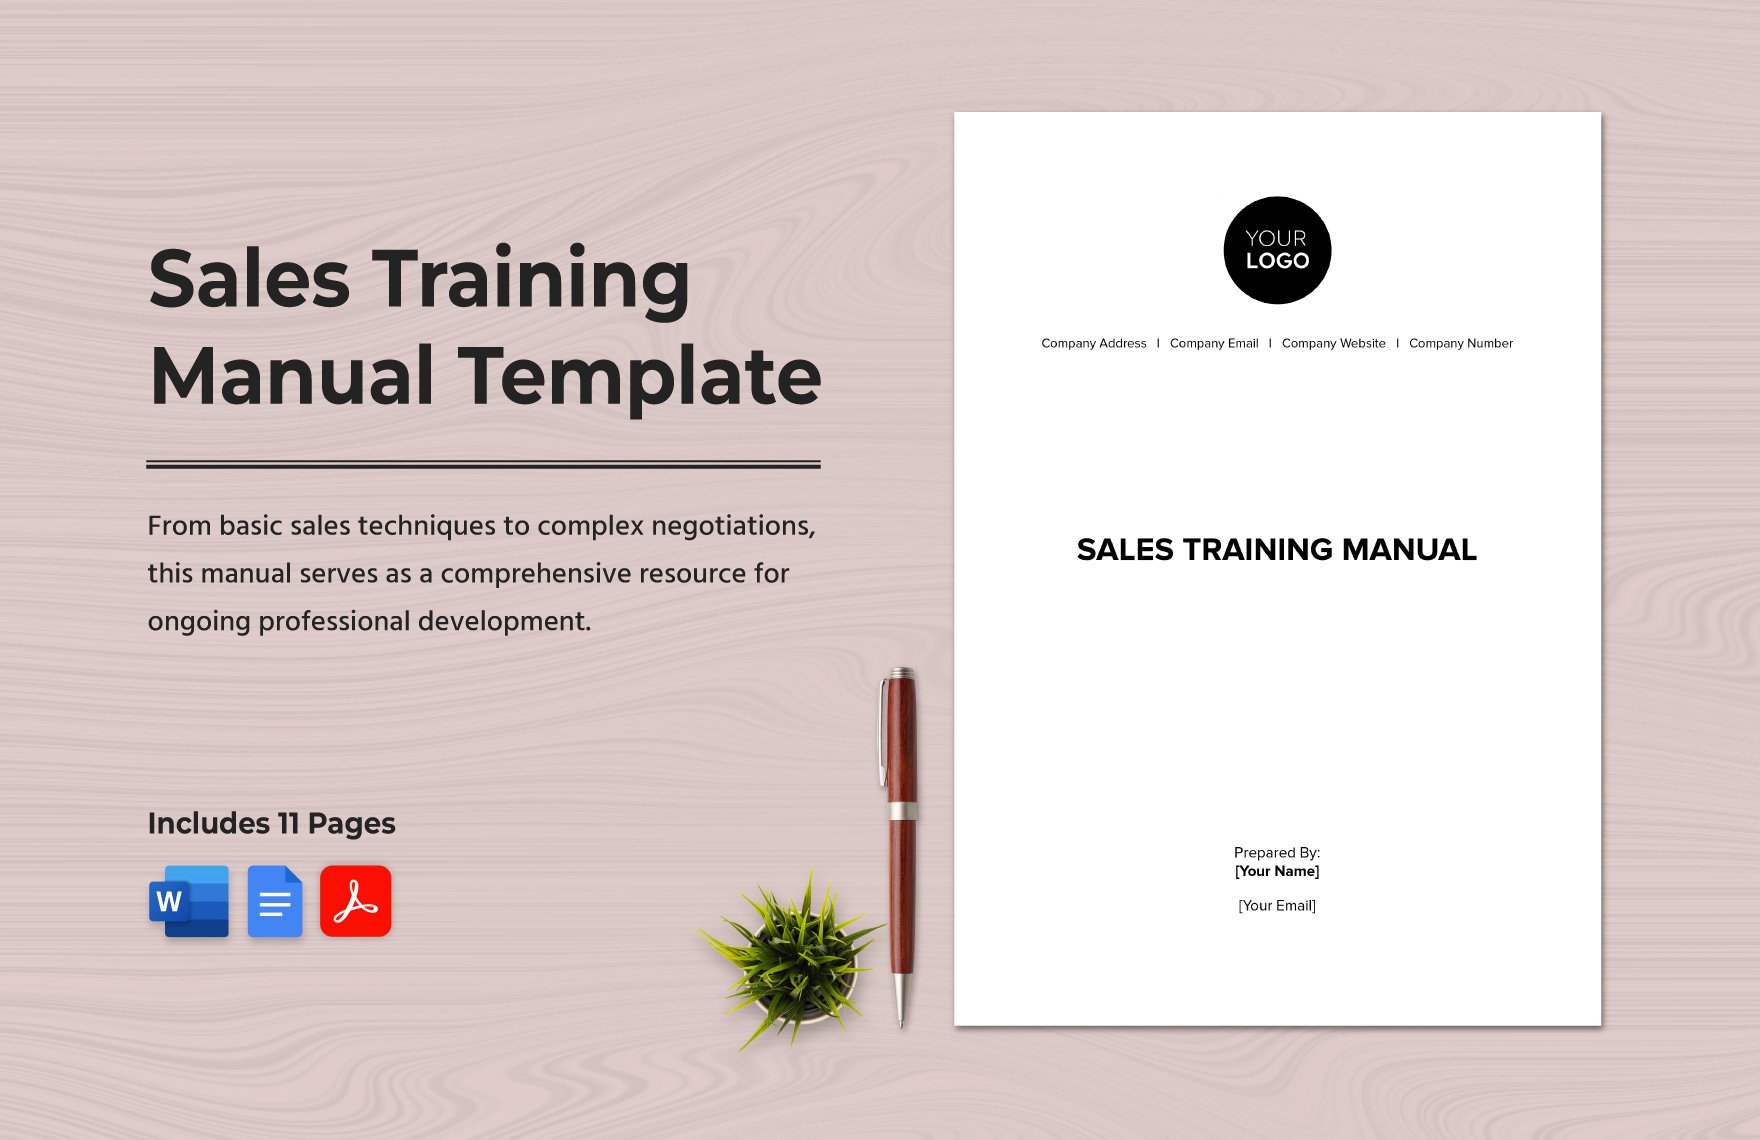 Sales Training Manual Template in Word, Google Docs, PDF